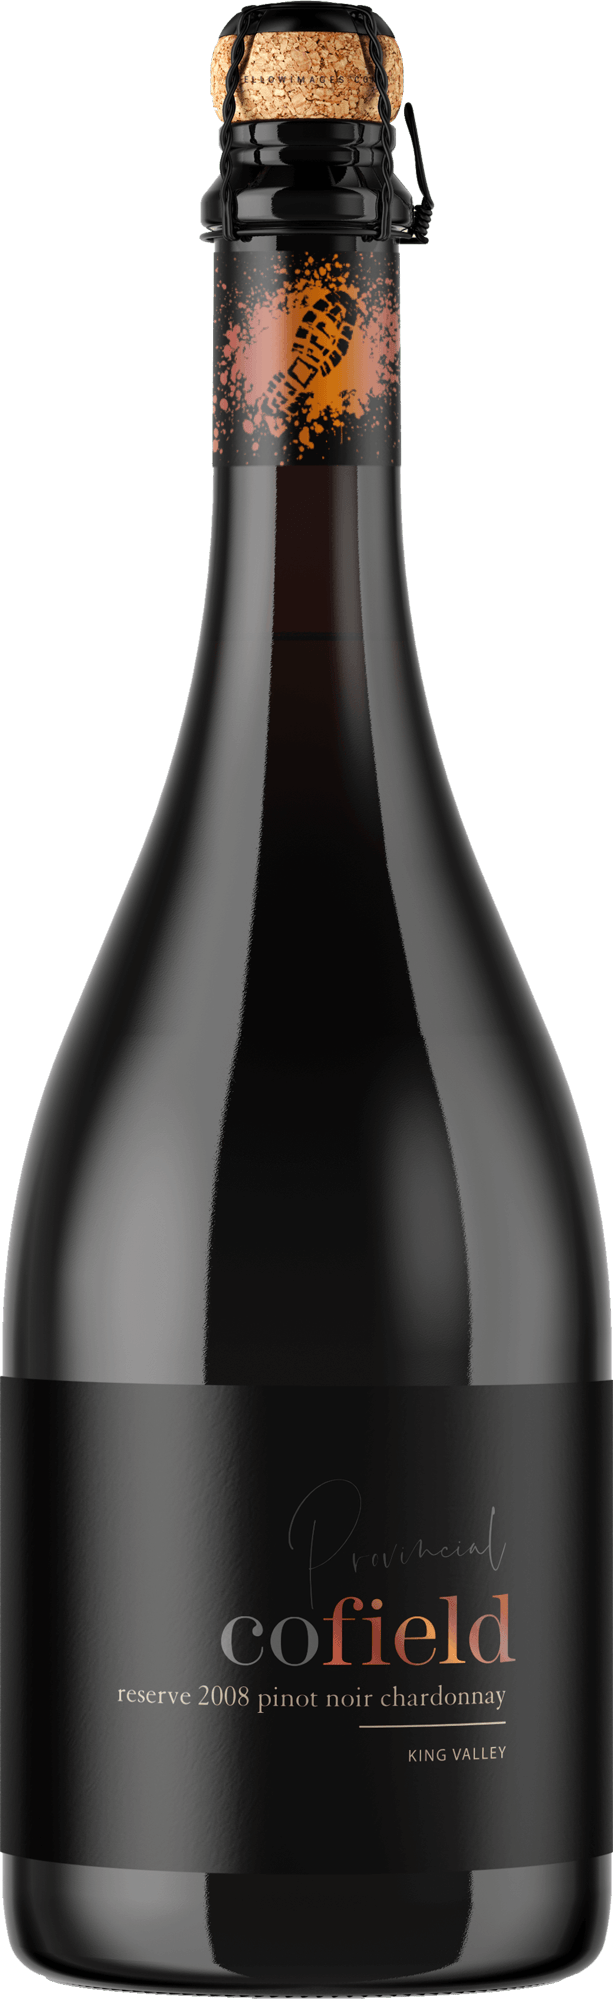 Cofield Sparkling Provincial Black Pinot Noir Chardonnay